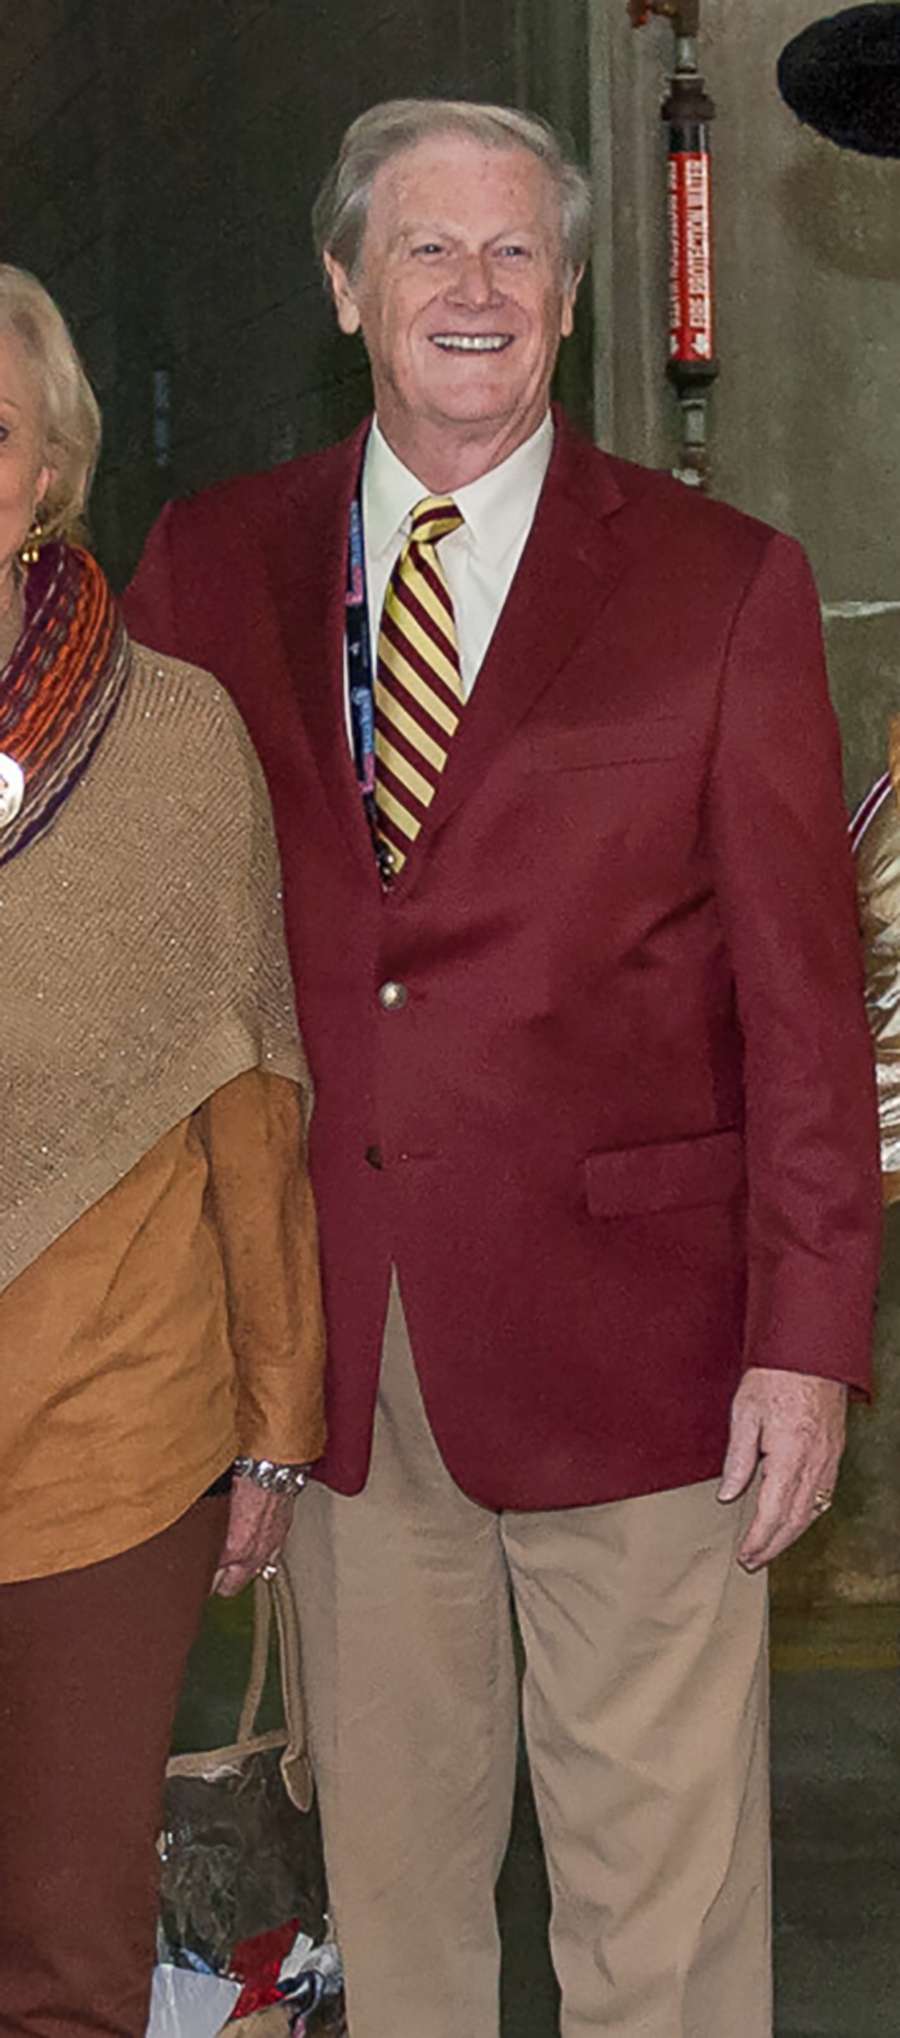 PHOTO: Florida State President John E. Thrasher poses before the 2015 Peach Bowl at the Georgia Dome in Atlanta, Georgia, Dec. 31, 2015. 